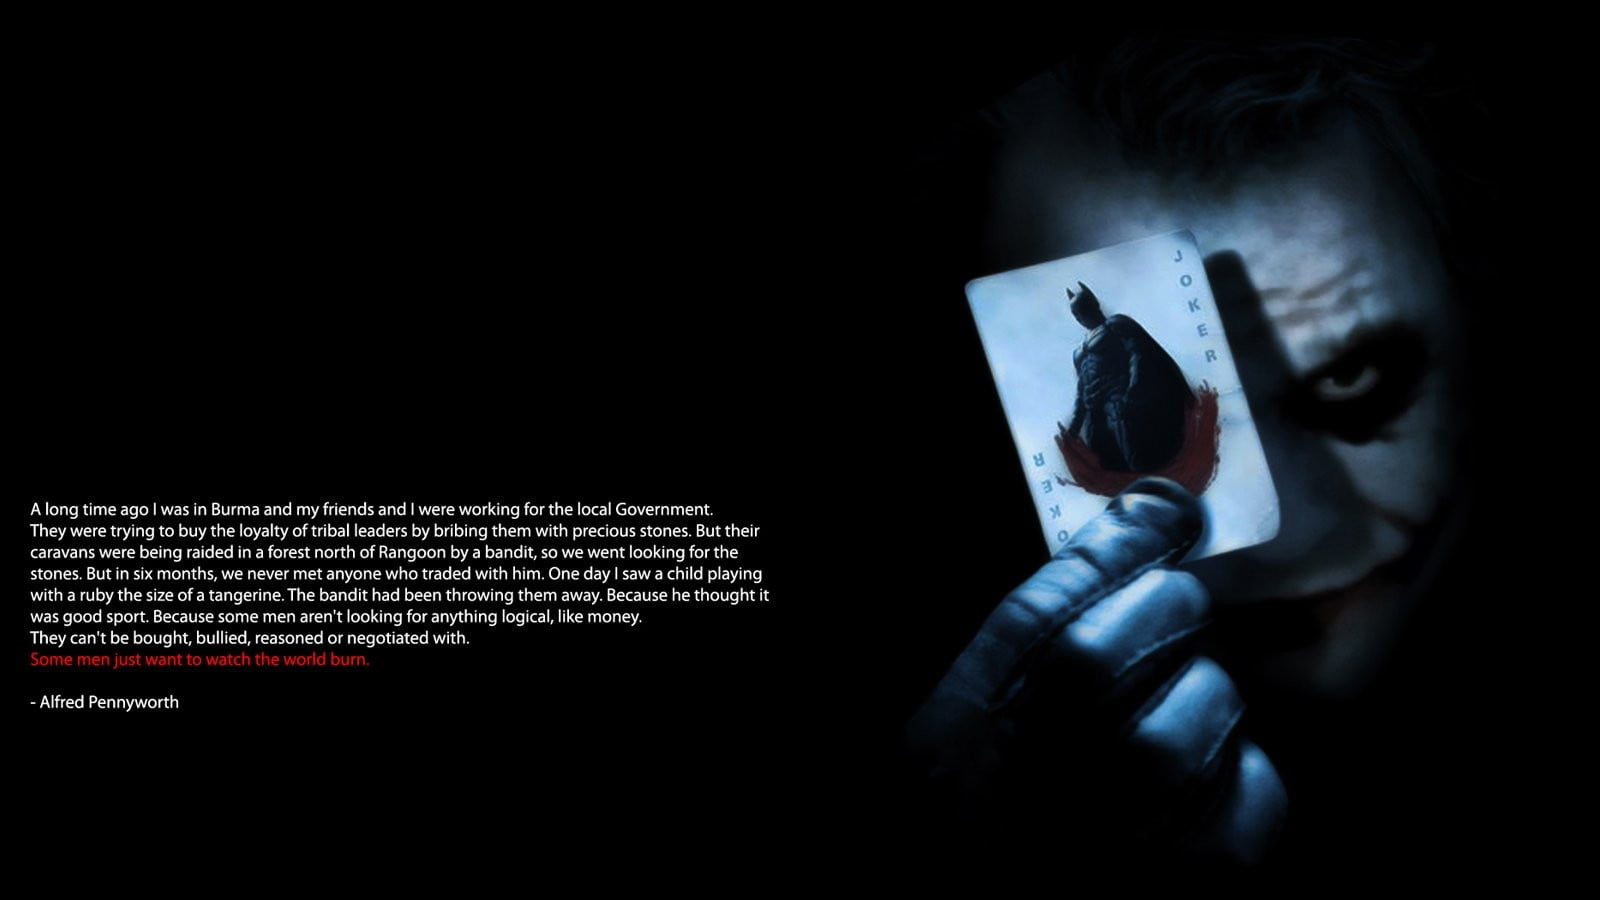 The Joker Heath Ledger, Joker, text, quote, Batman